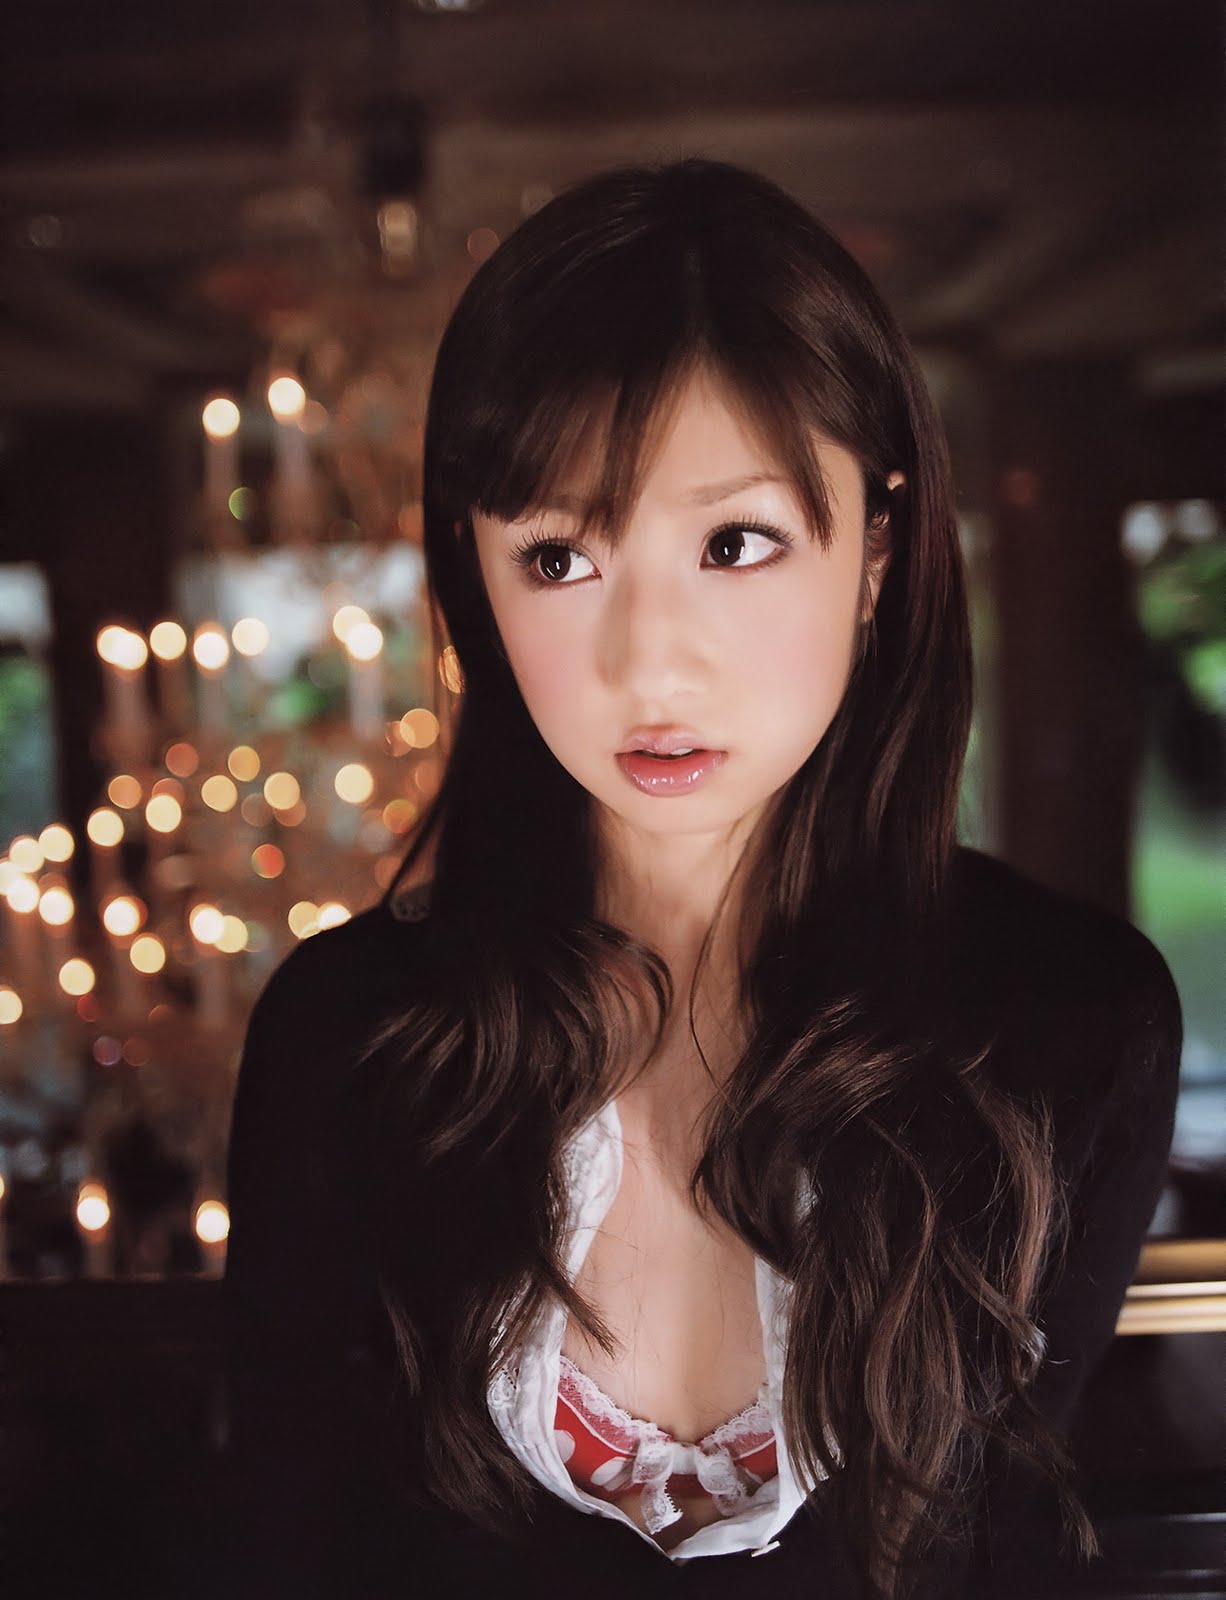 Japanese hot girls photo: Yuko Ogura Idol Japanese girl, Free wallpaper